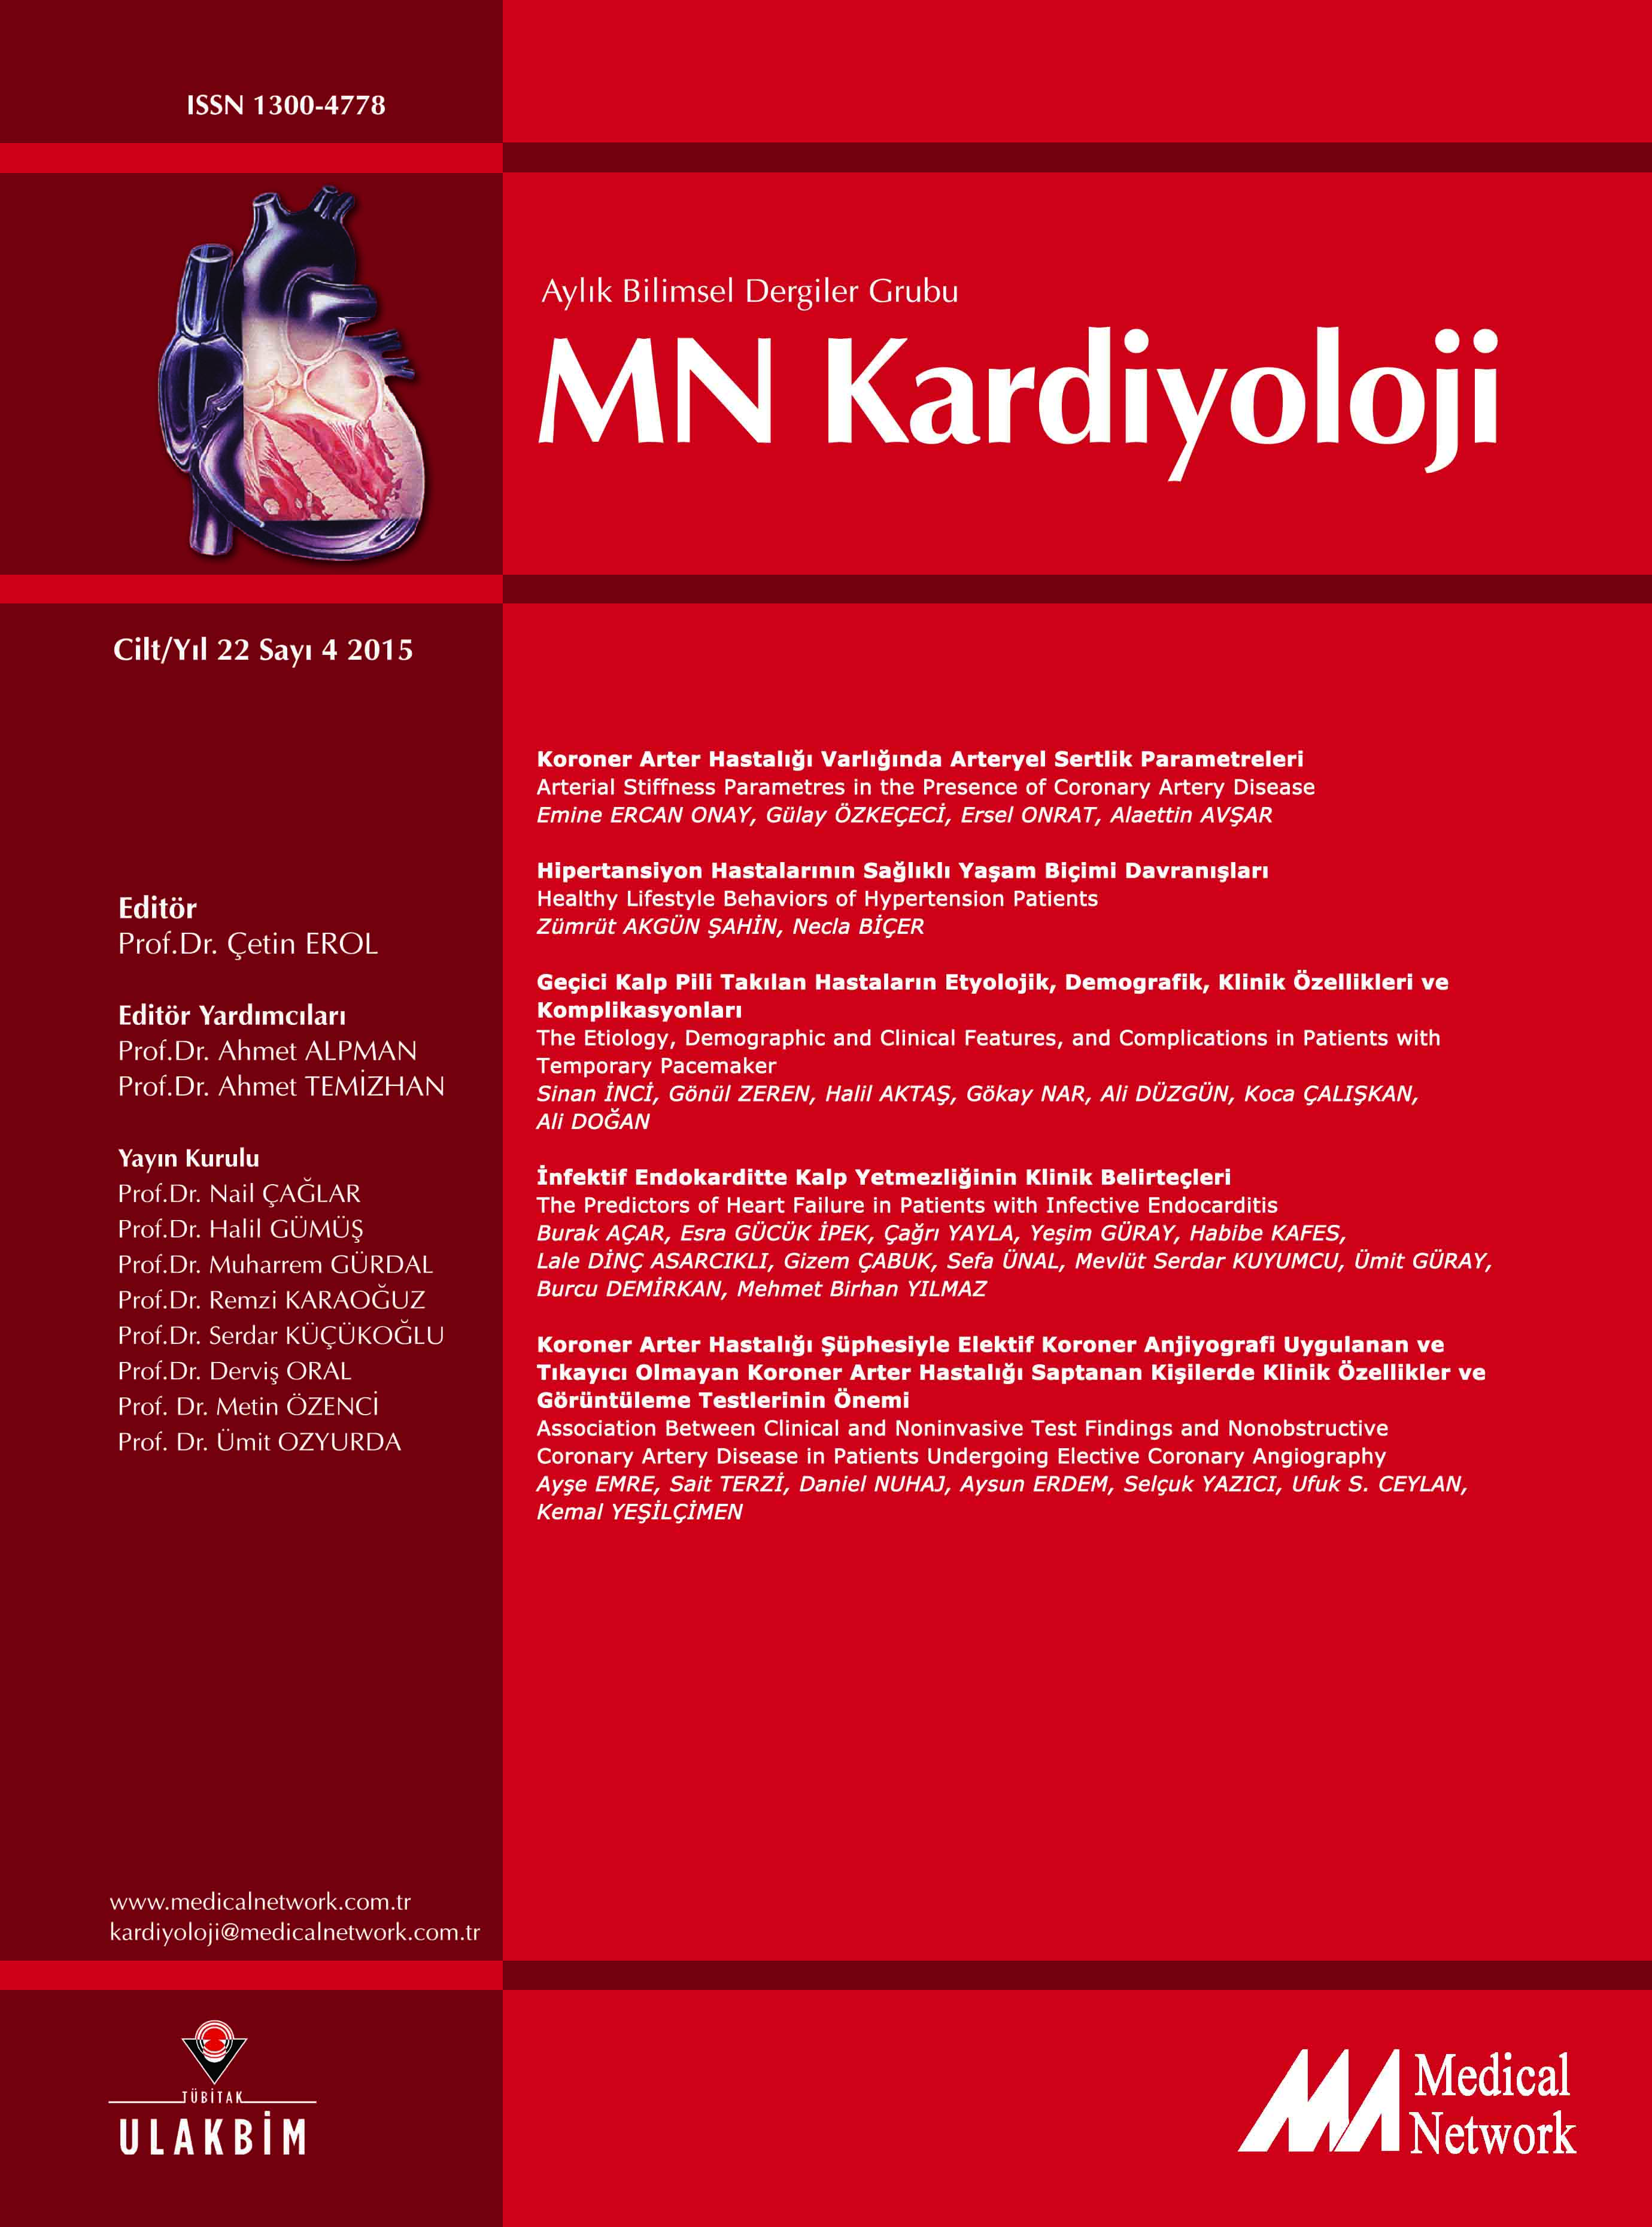 <p>MN Kardiyoloji Cilt: 22 Say: 4 2015 (MN Cardiology Volume: 22 No: 4 2015)</p>